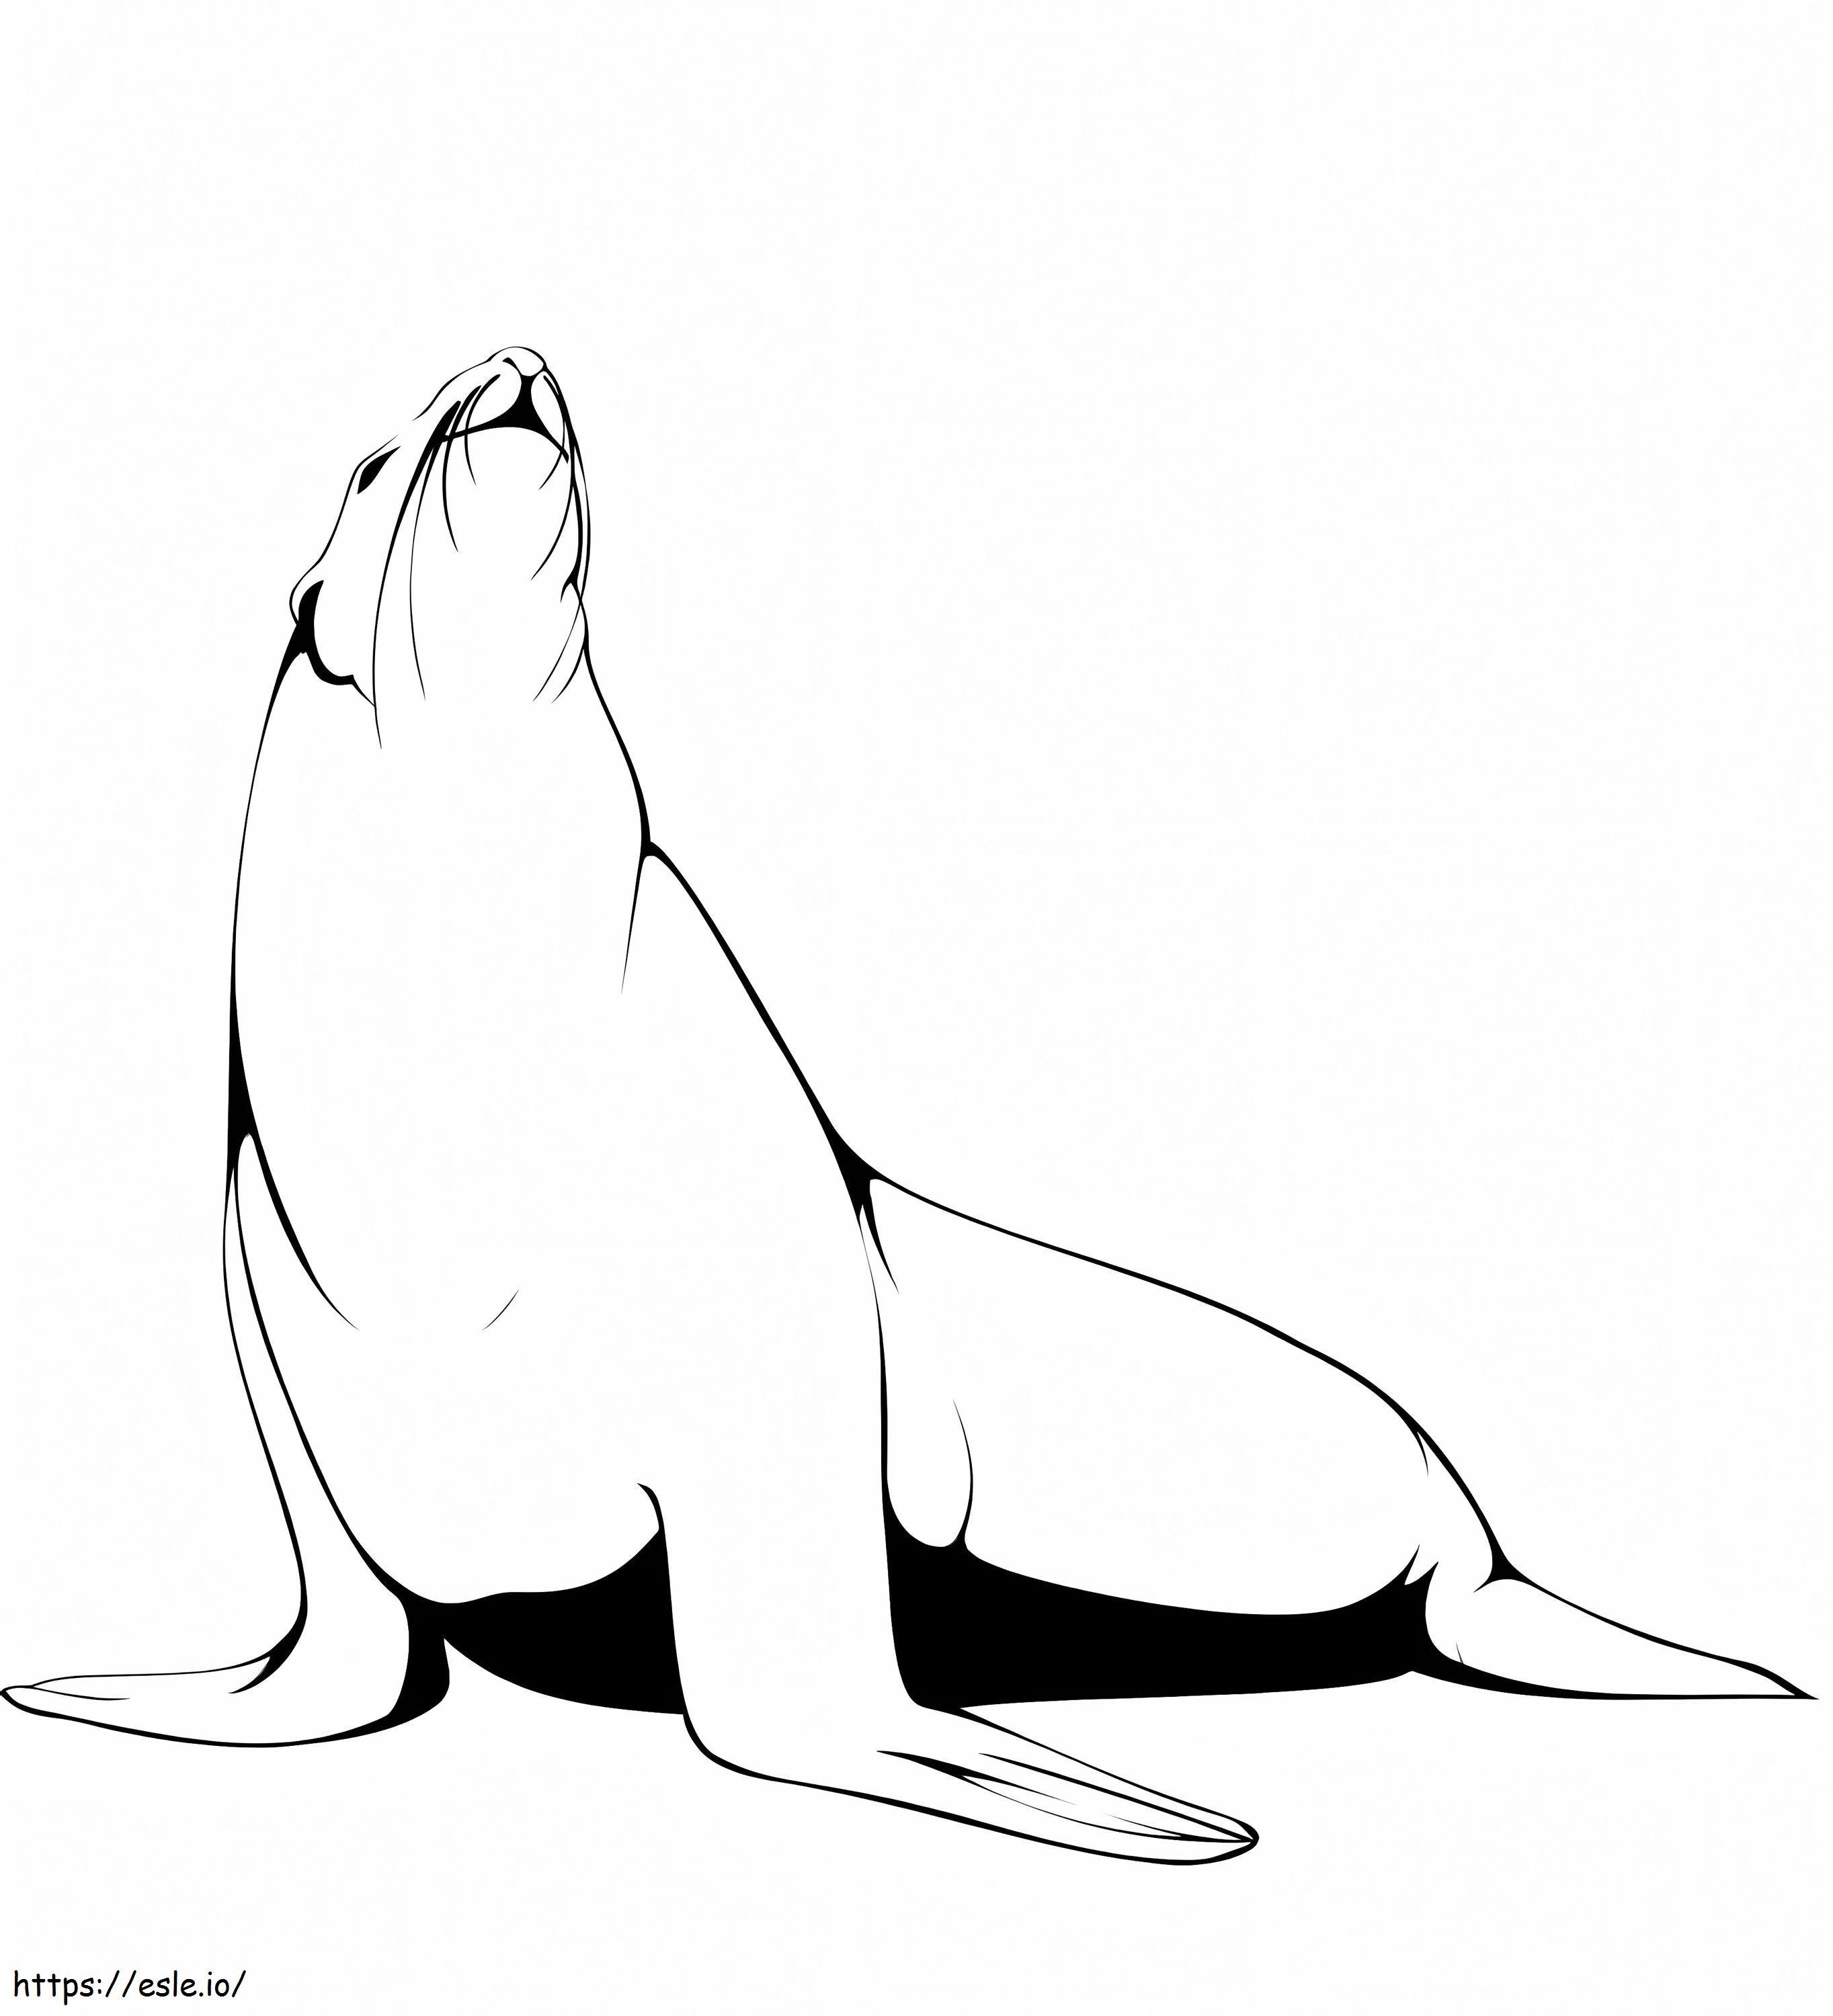 Normal Sea Lion coloring page